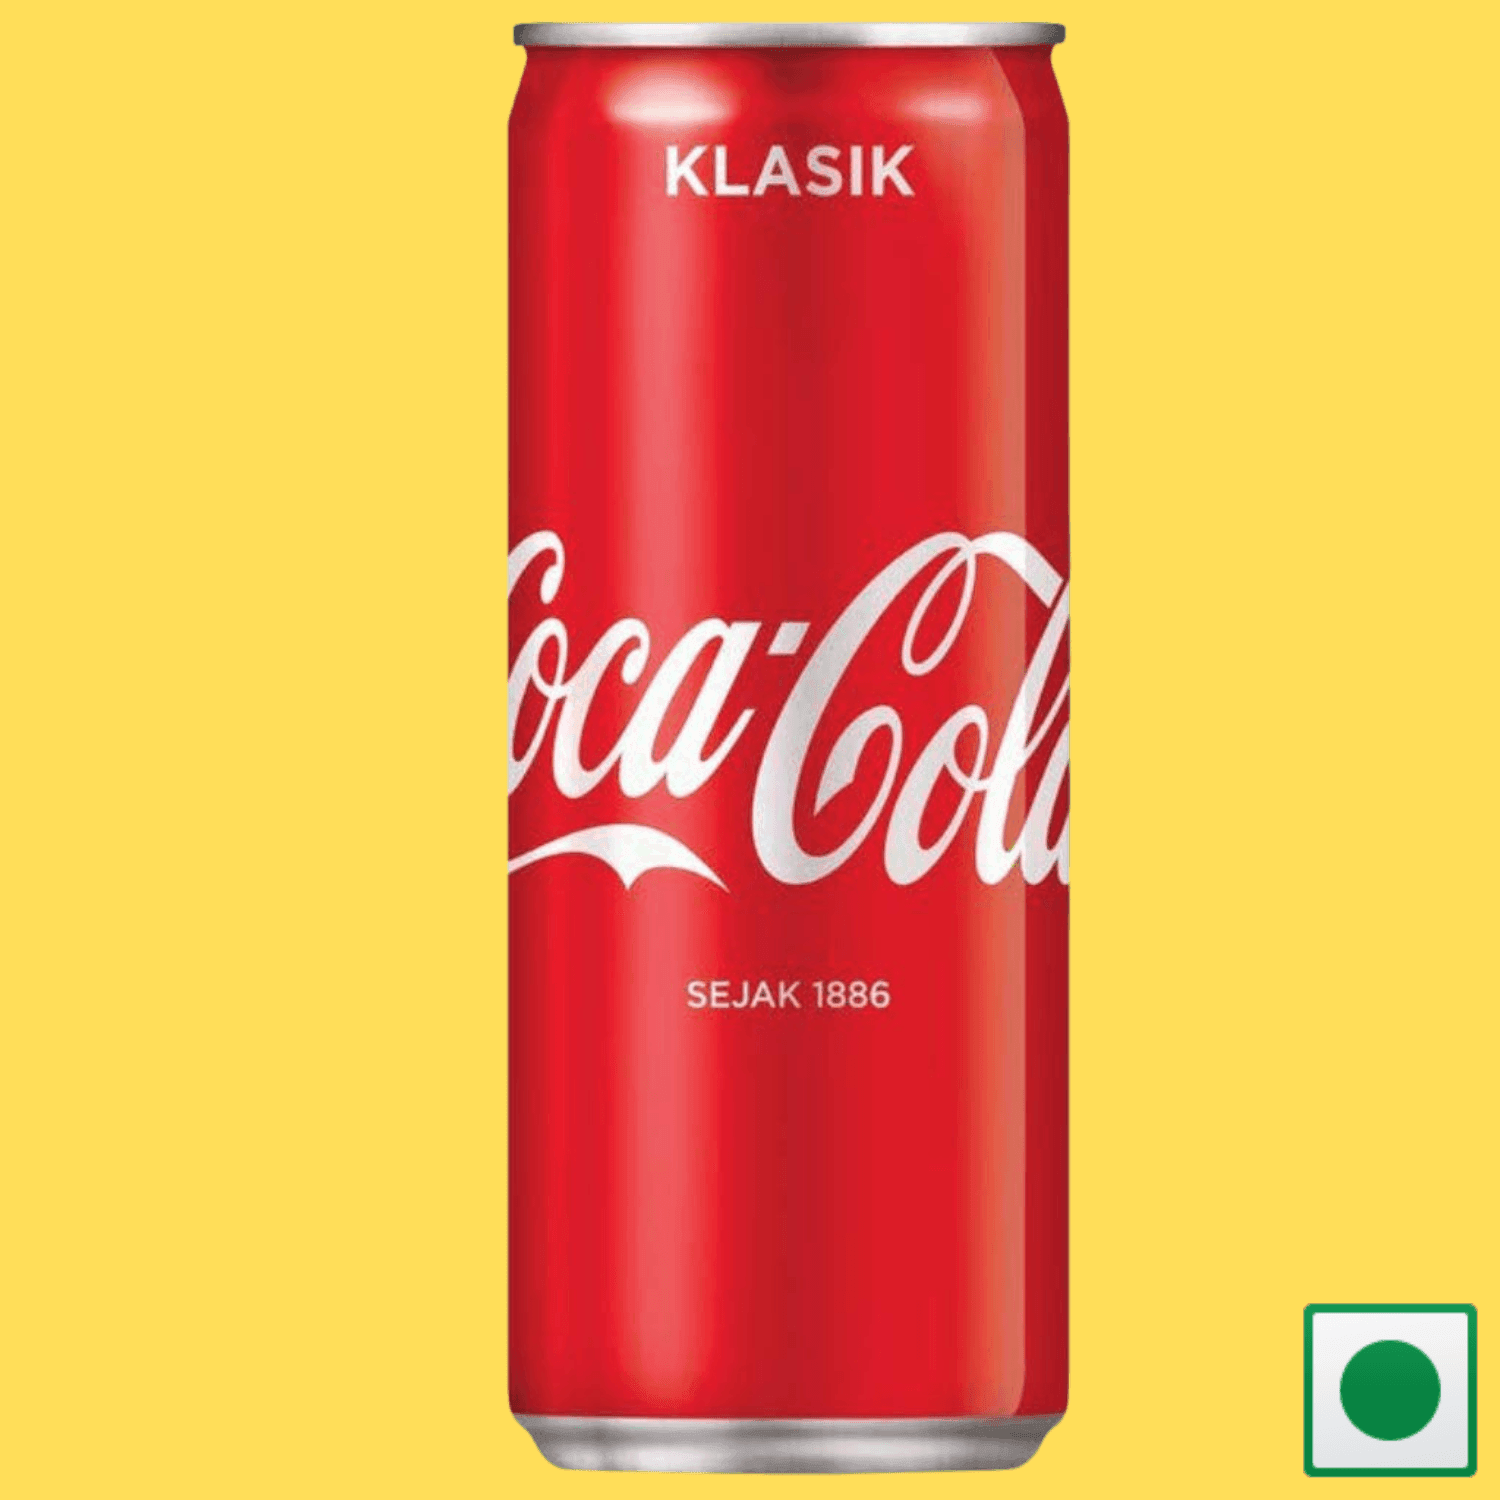 Coca-Cola Klasik(Classic) 320 ml (IMPORTED) - Super 7 Mart